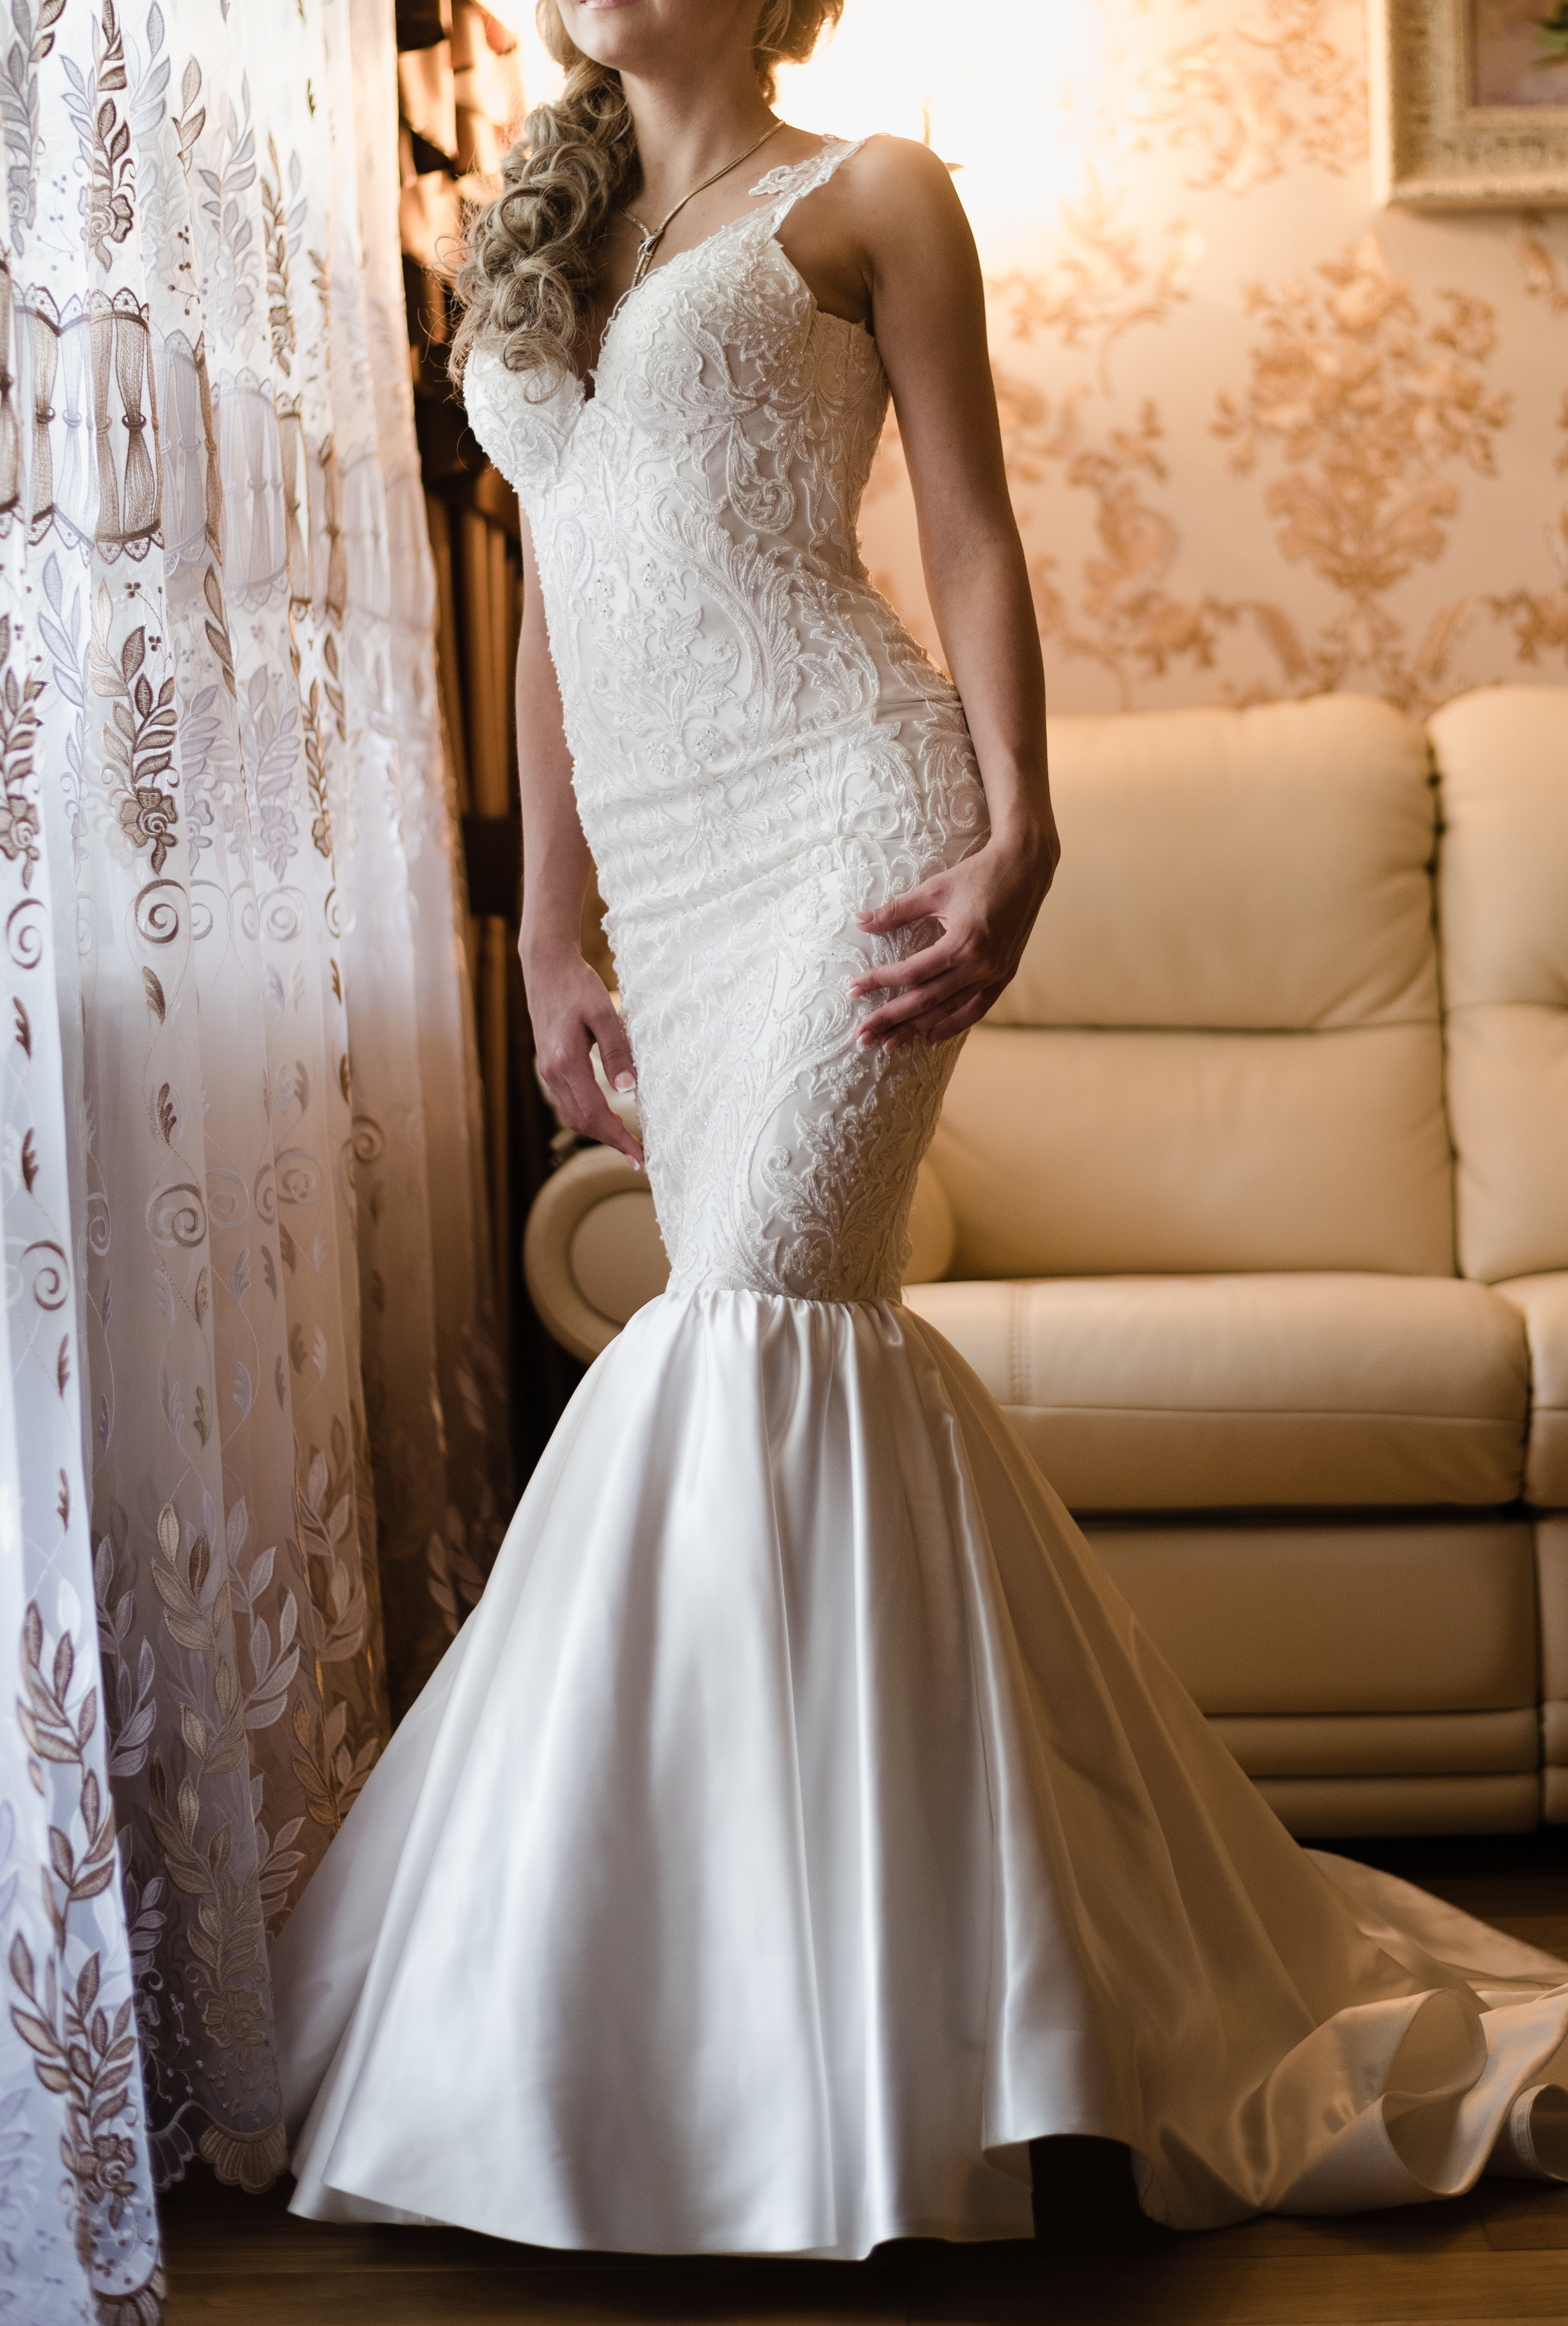 A bride in a wedding dress | Source: Shutterstock